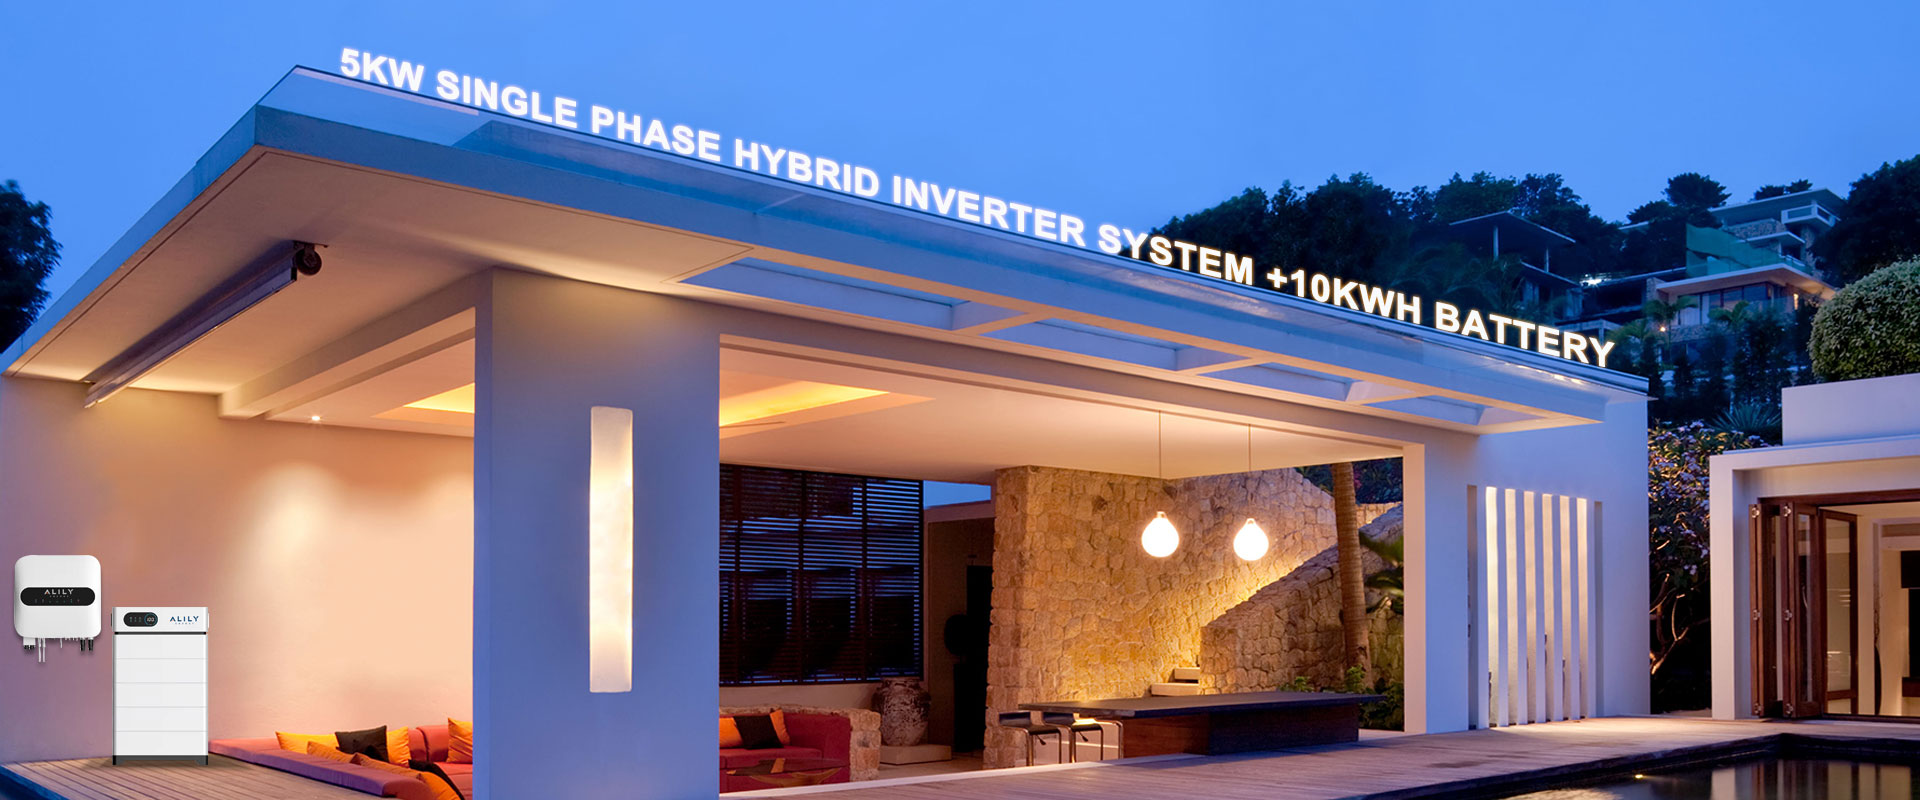 Hybrid Inverter system